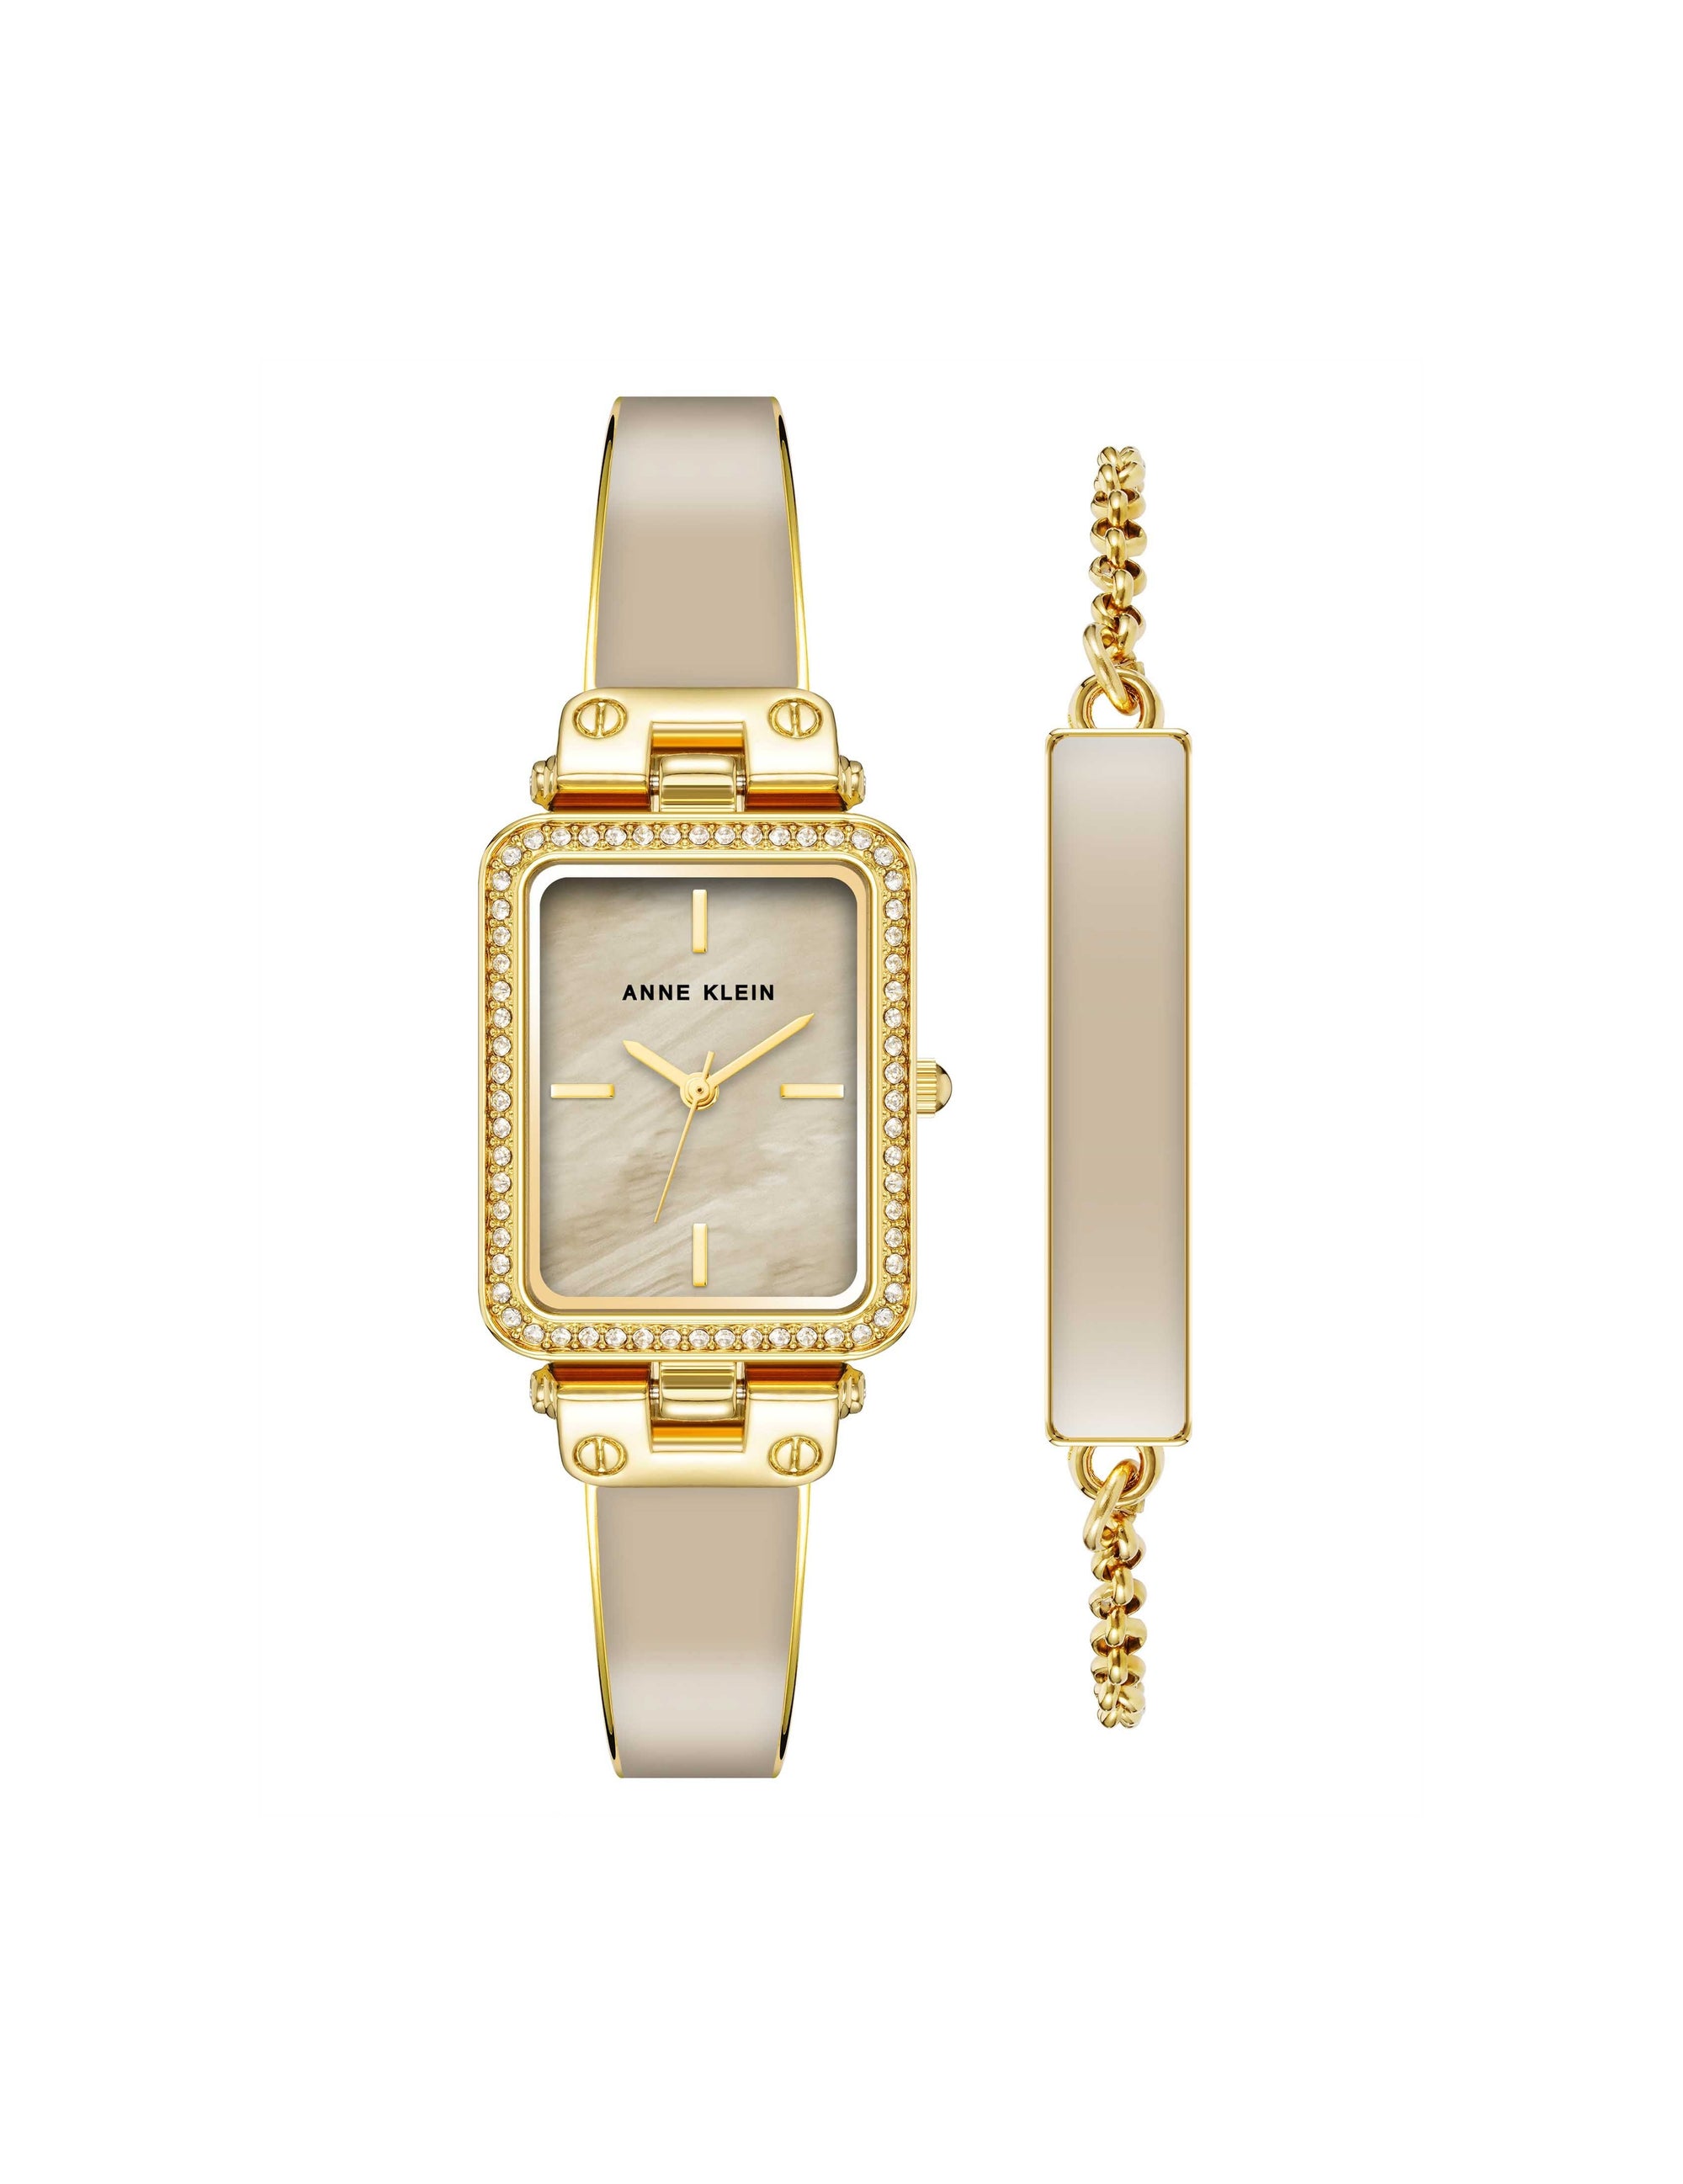 Anne Klein Women's Premium Crystal Accented Silver-Tone Charm Bracelet Watch  NEW | eBay